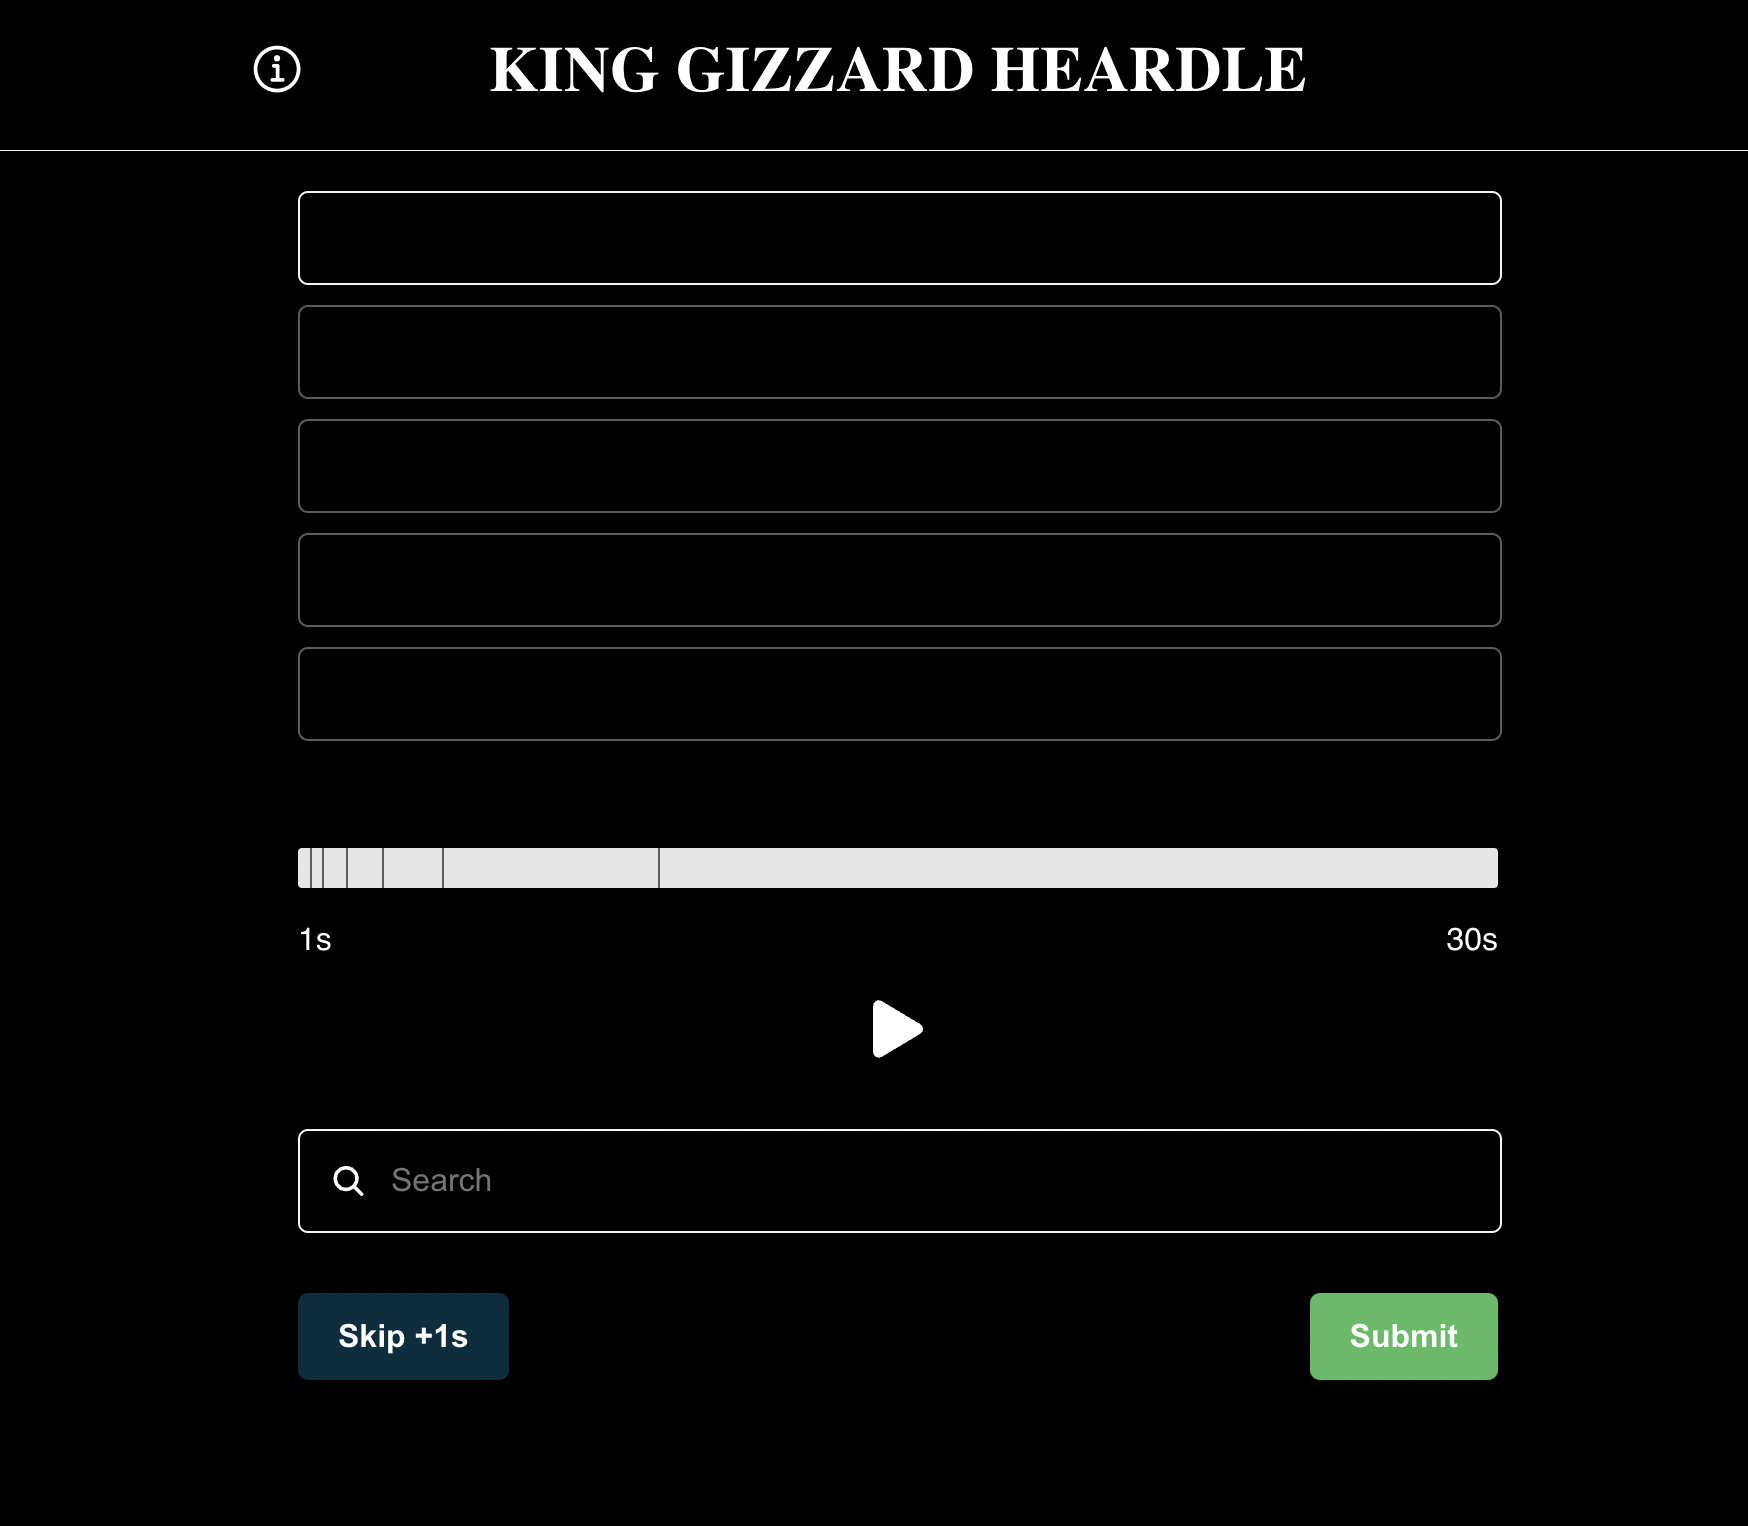 King Gizz Heardle game